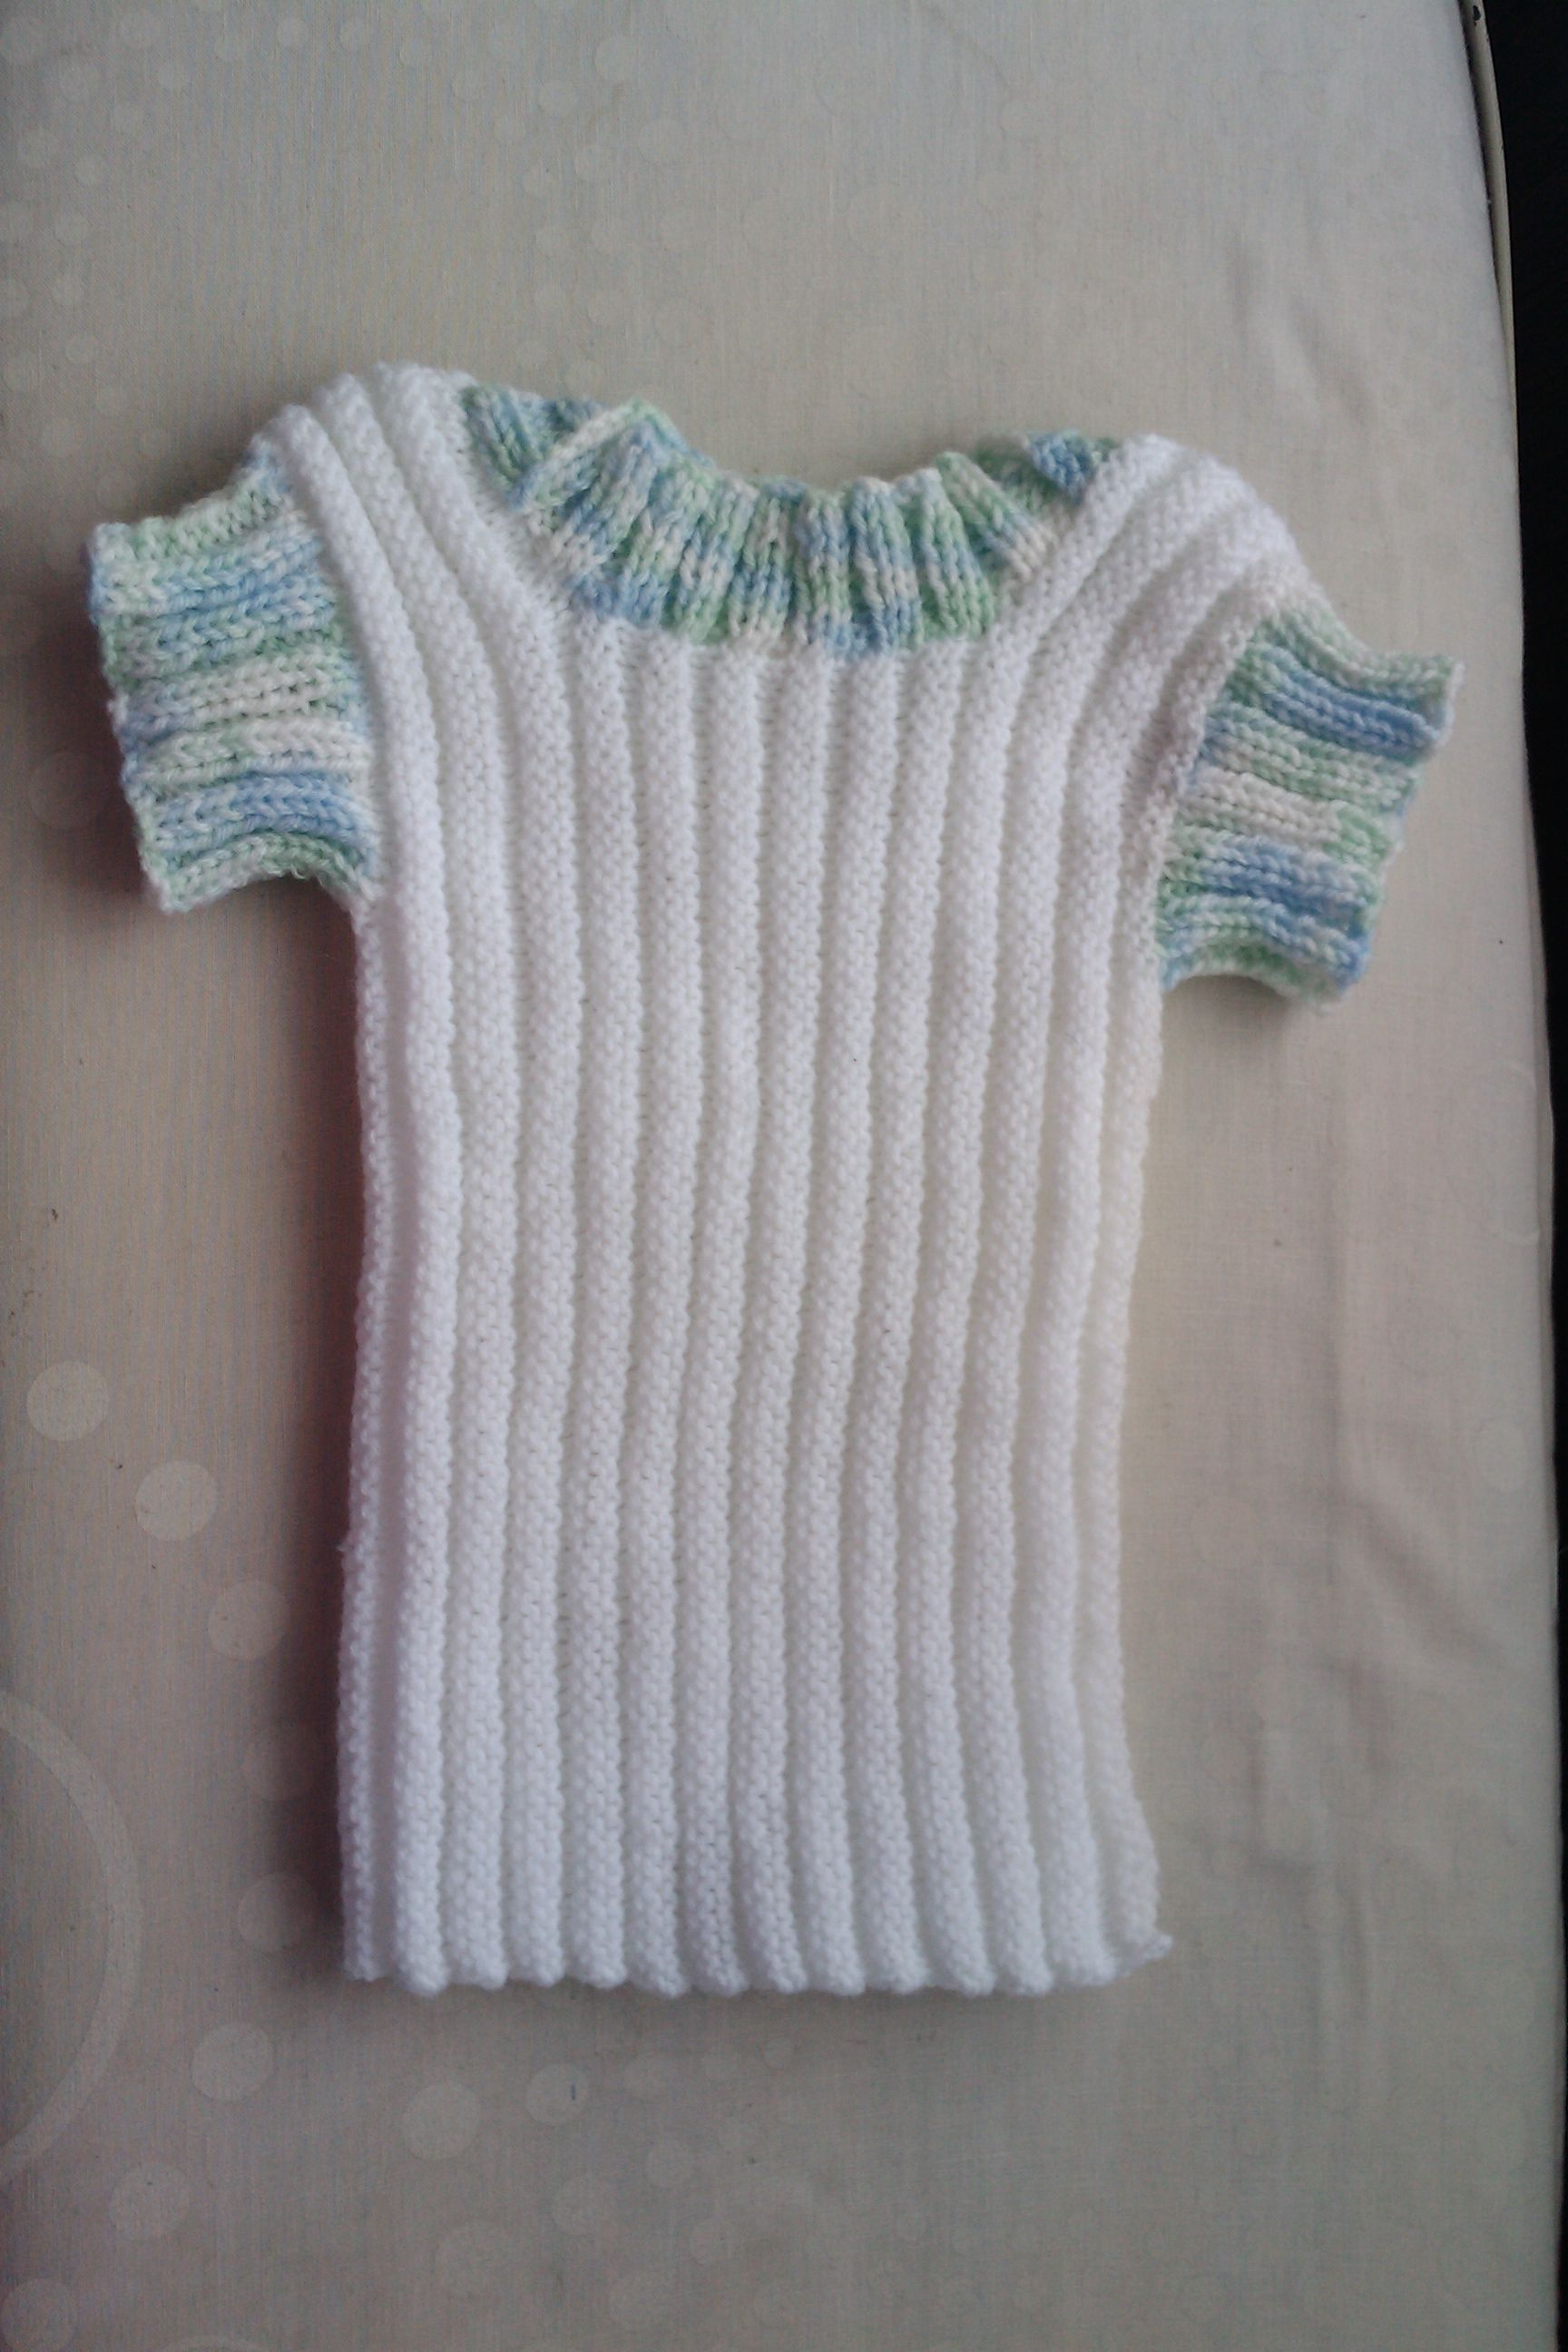 Crochet Baby Singlet Pattern 2014 Knitted For Charity Ba Singlet Auckland Knitting